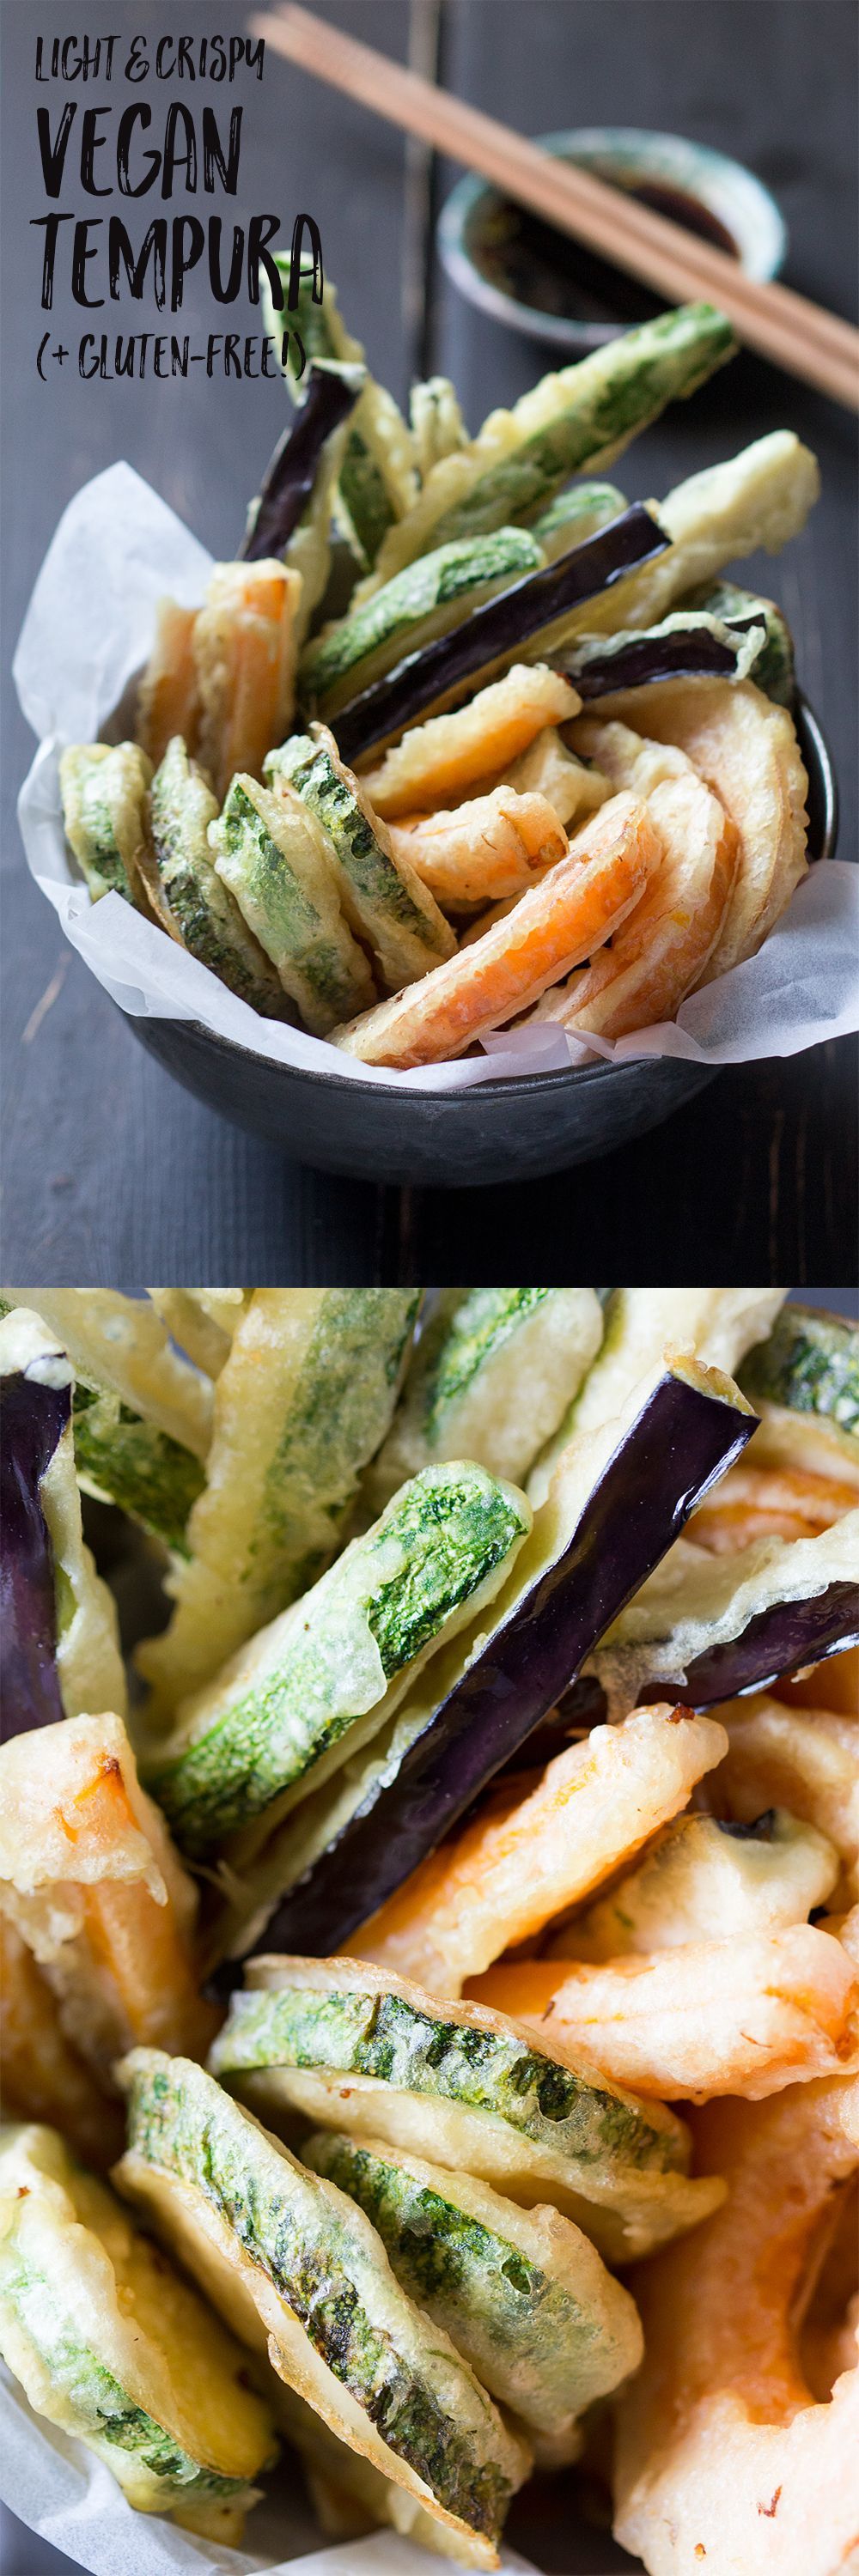 Light and crispy vegetable tempura makes an ideal dinner party appetizer. Its easy to make, vegan